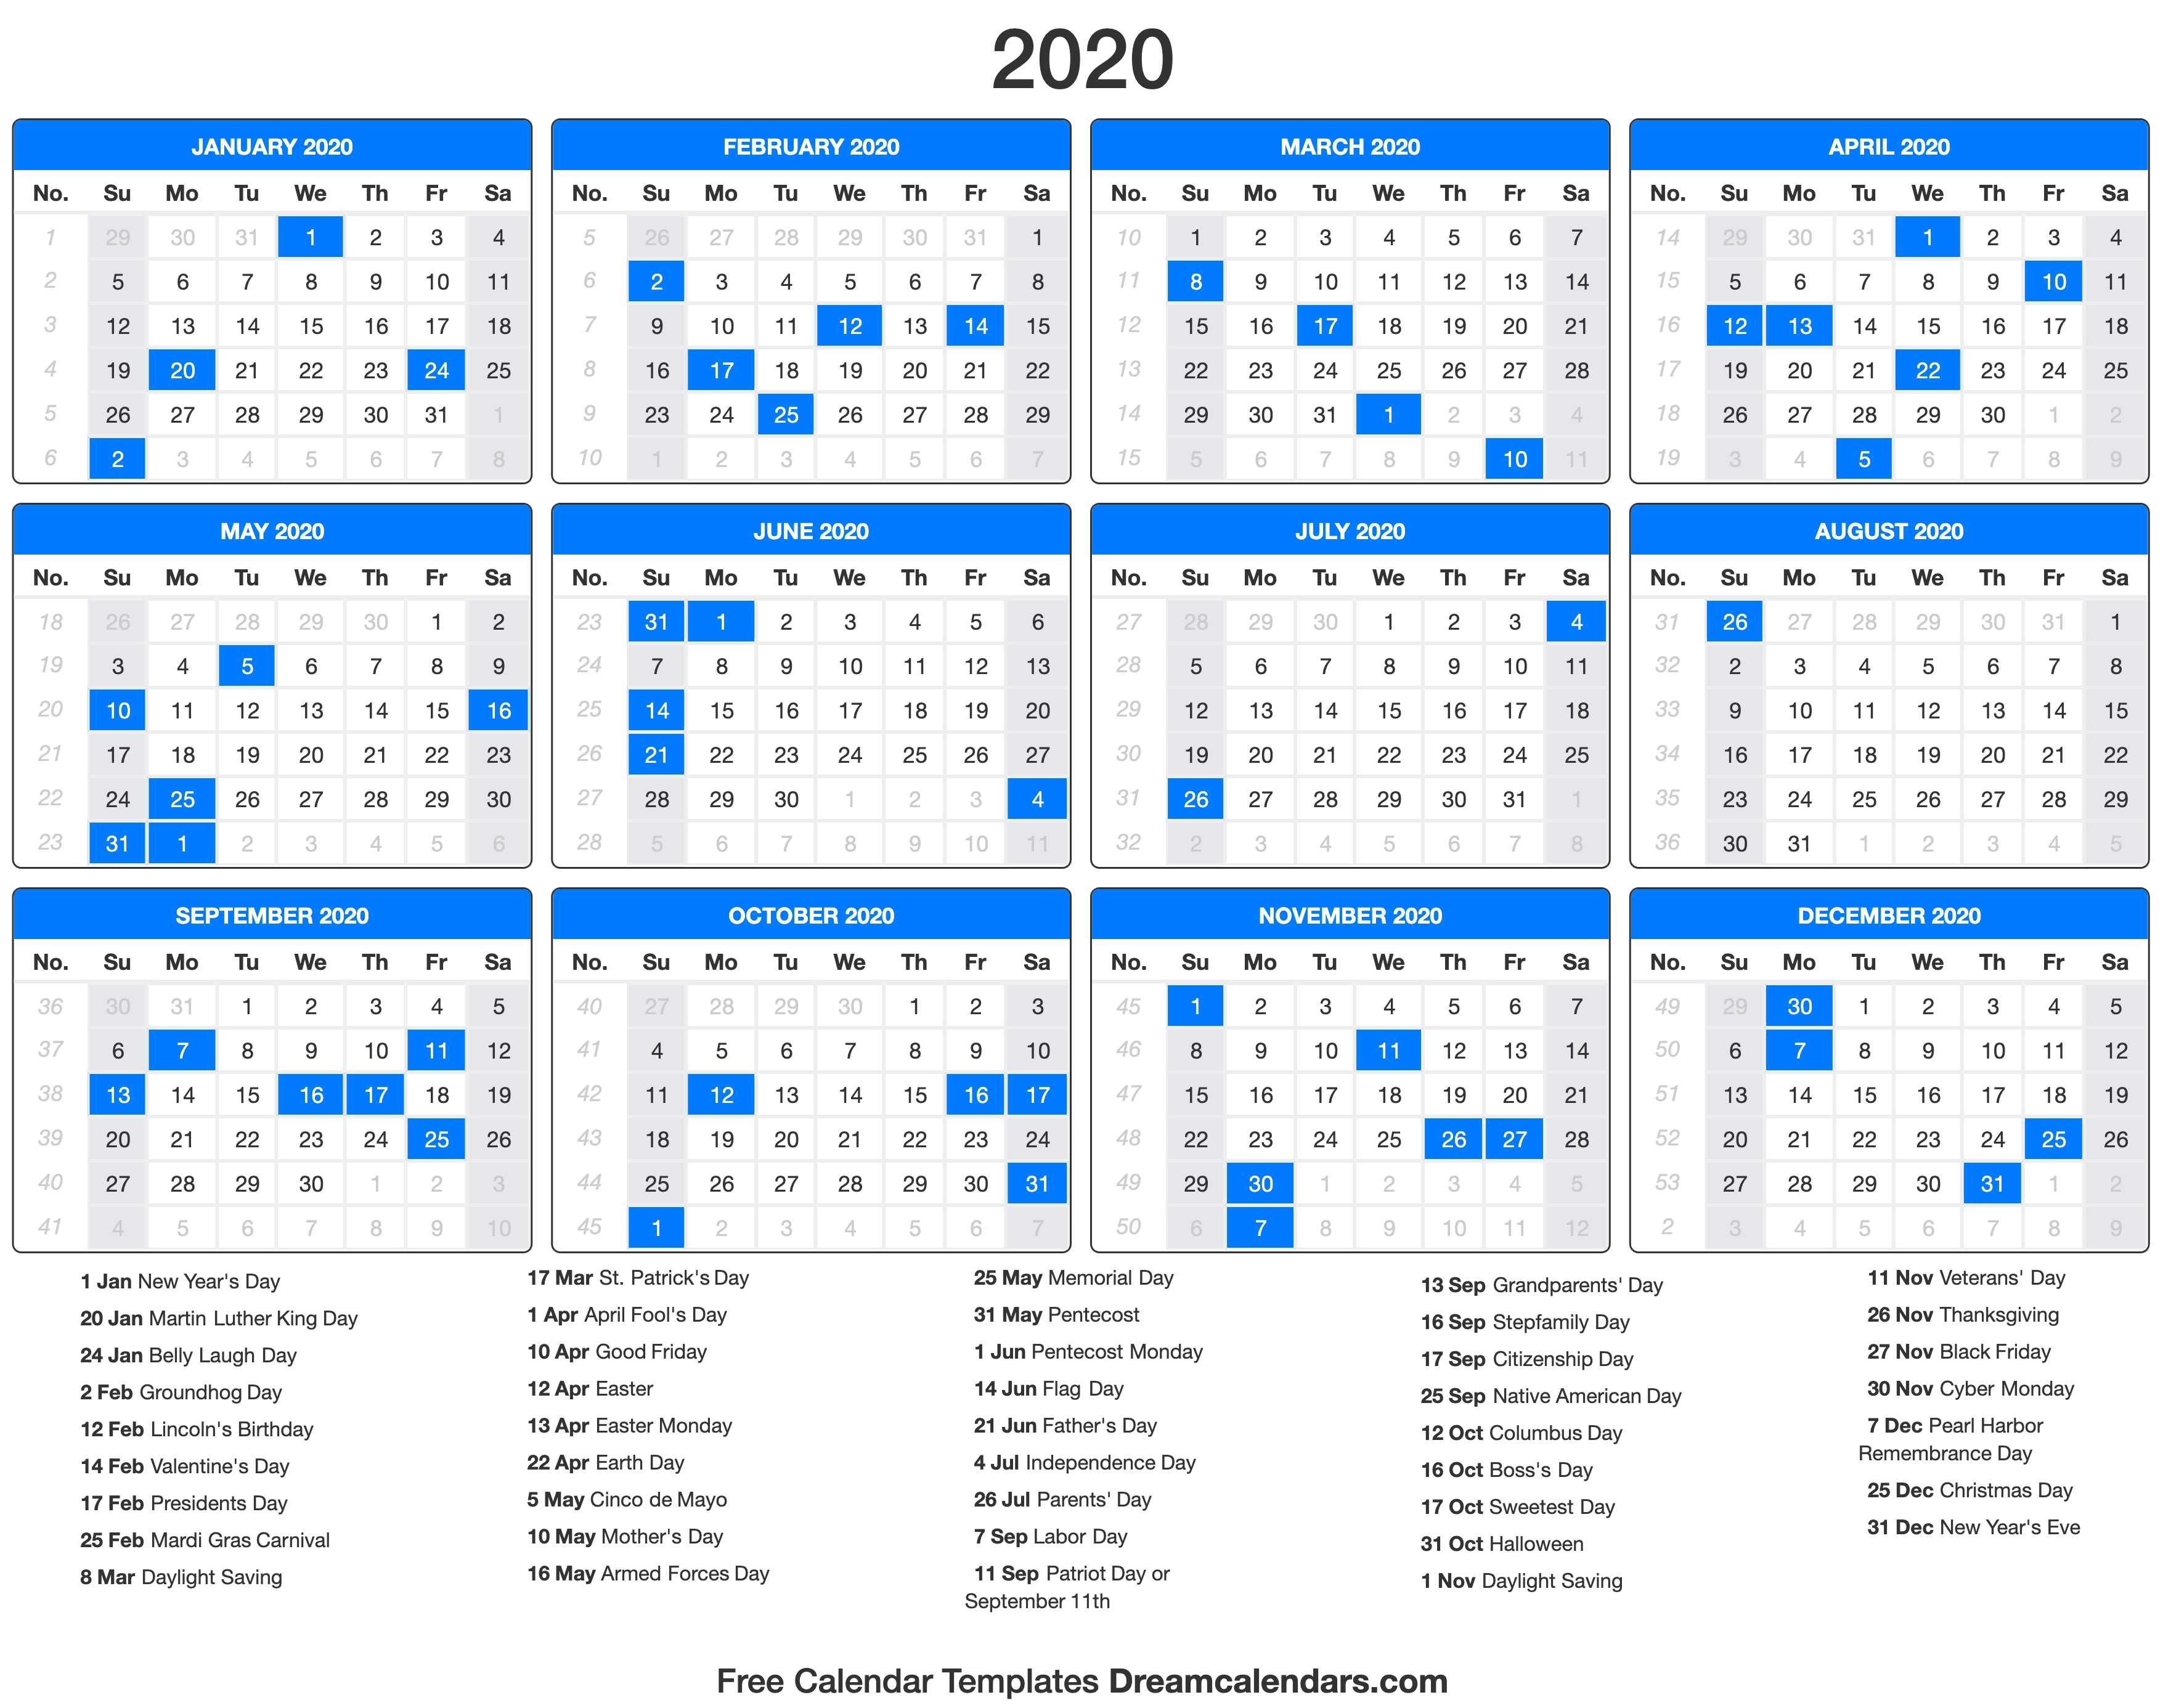 Dream Calendars - Make Your Calendar Template Blog-Printable Calendar With Jewish Holidays 2020